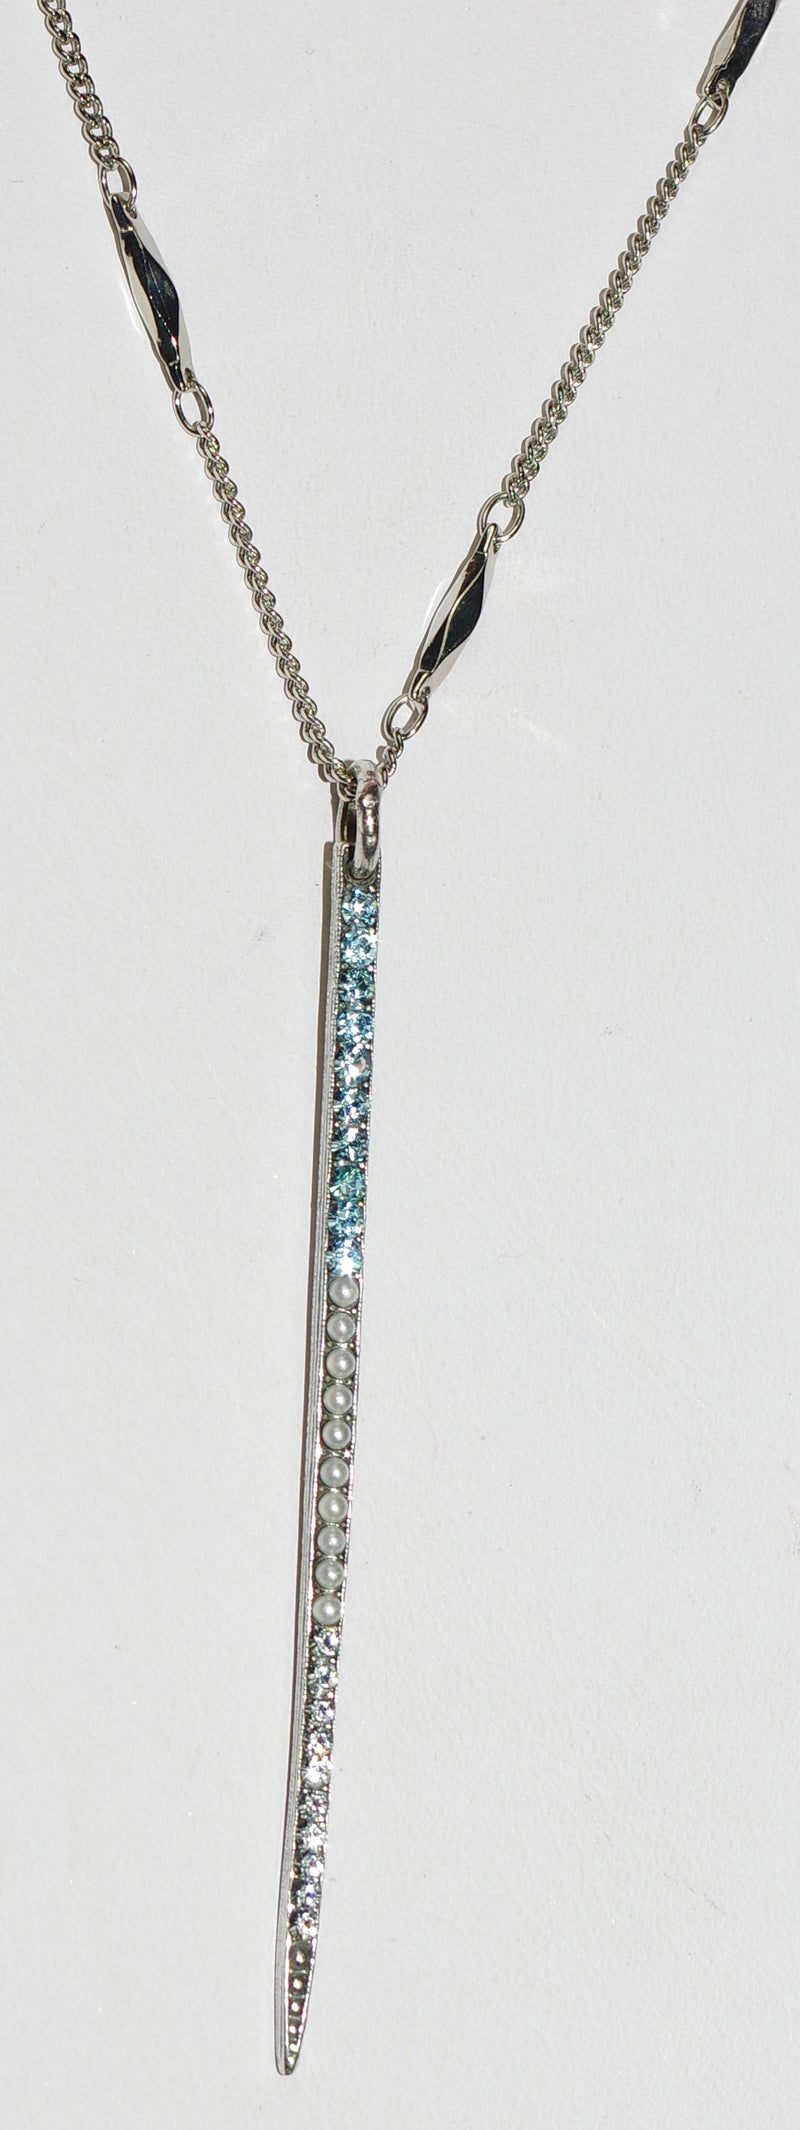 MARIANA PENDANT ARUBA: blue, pearl, clear stones in 2.5" silver setting, 32" adjustable chain